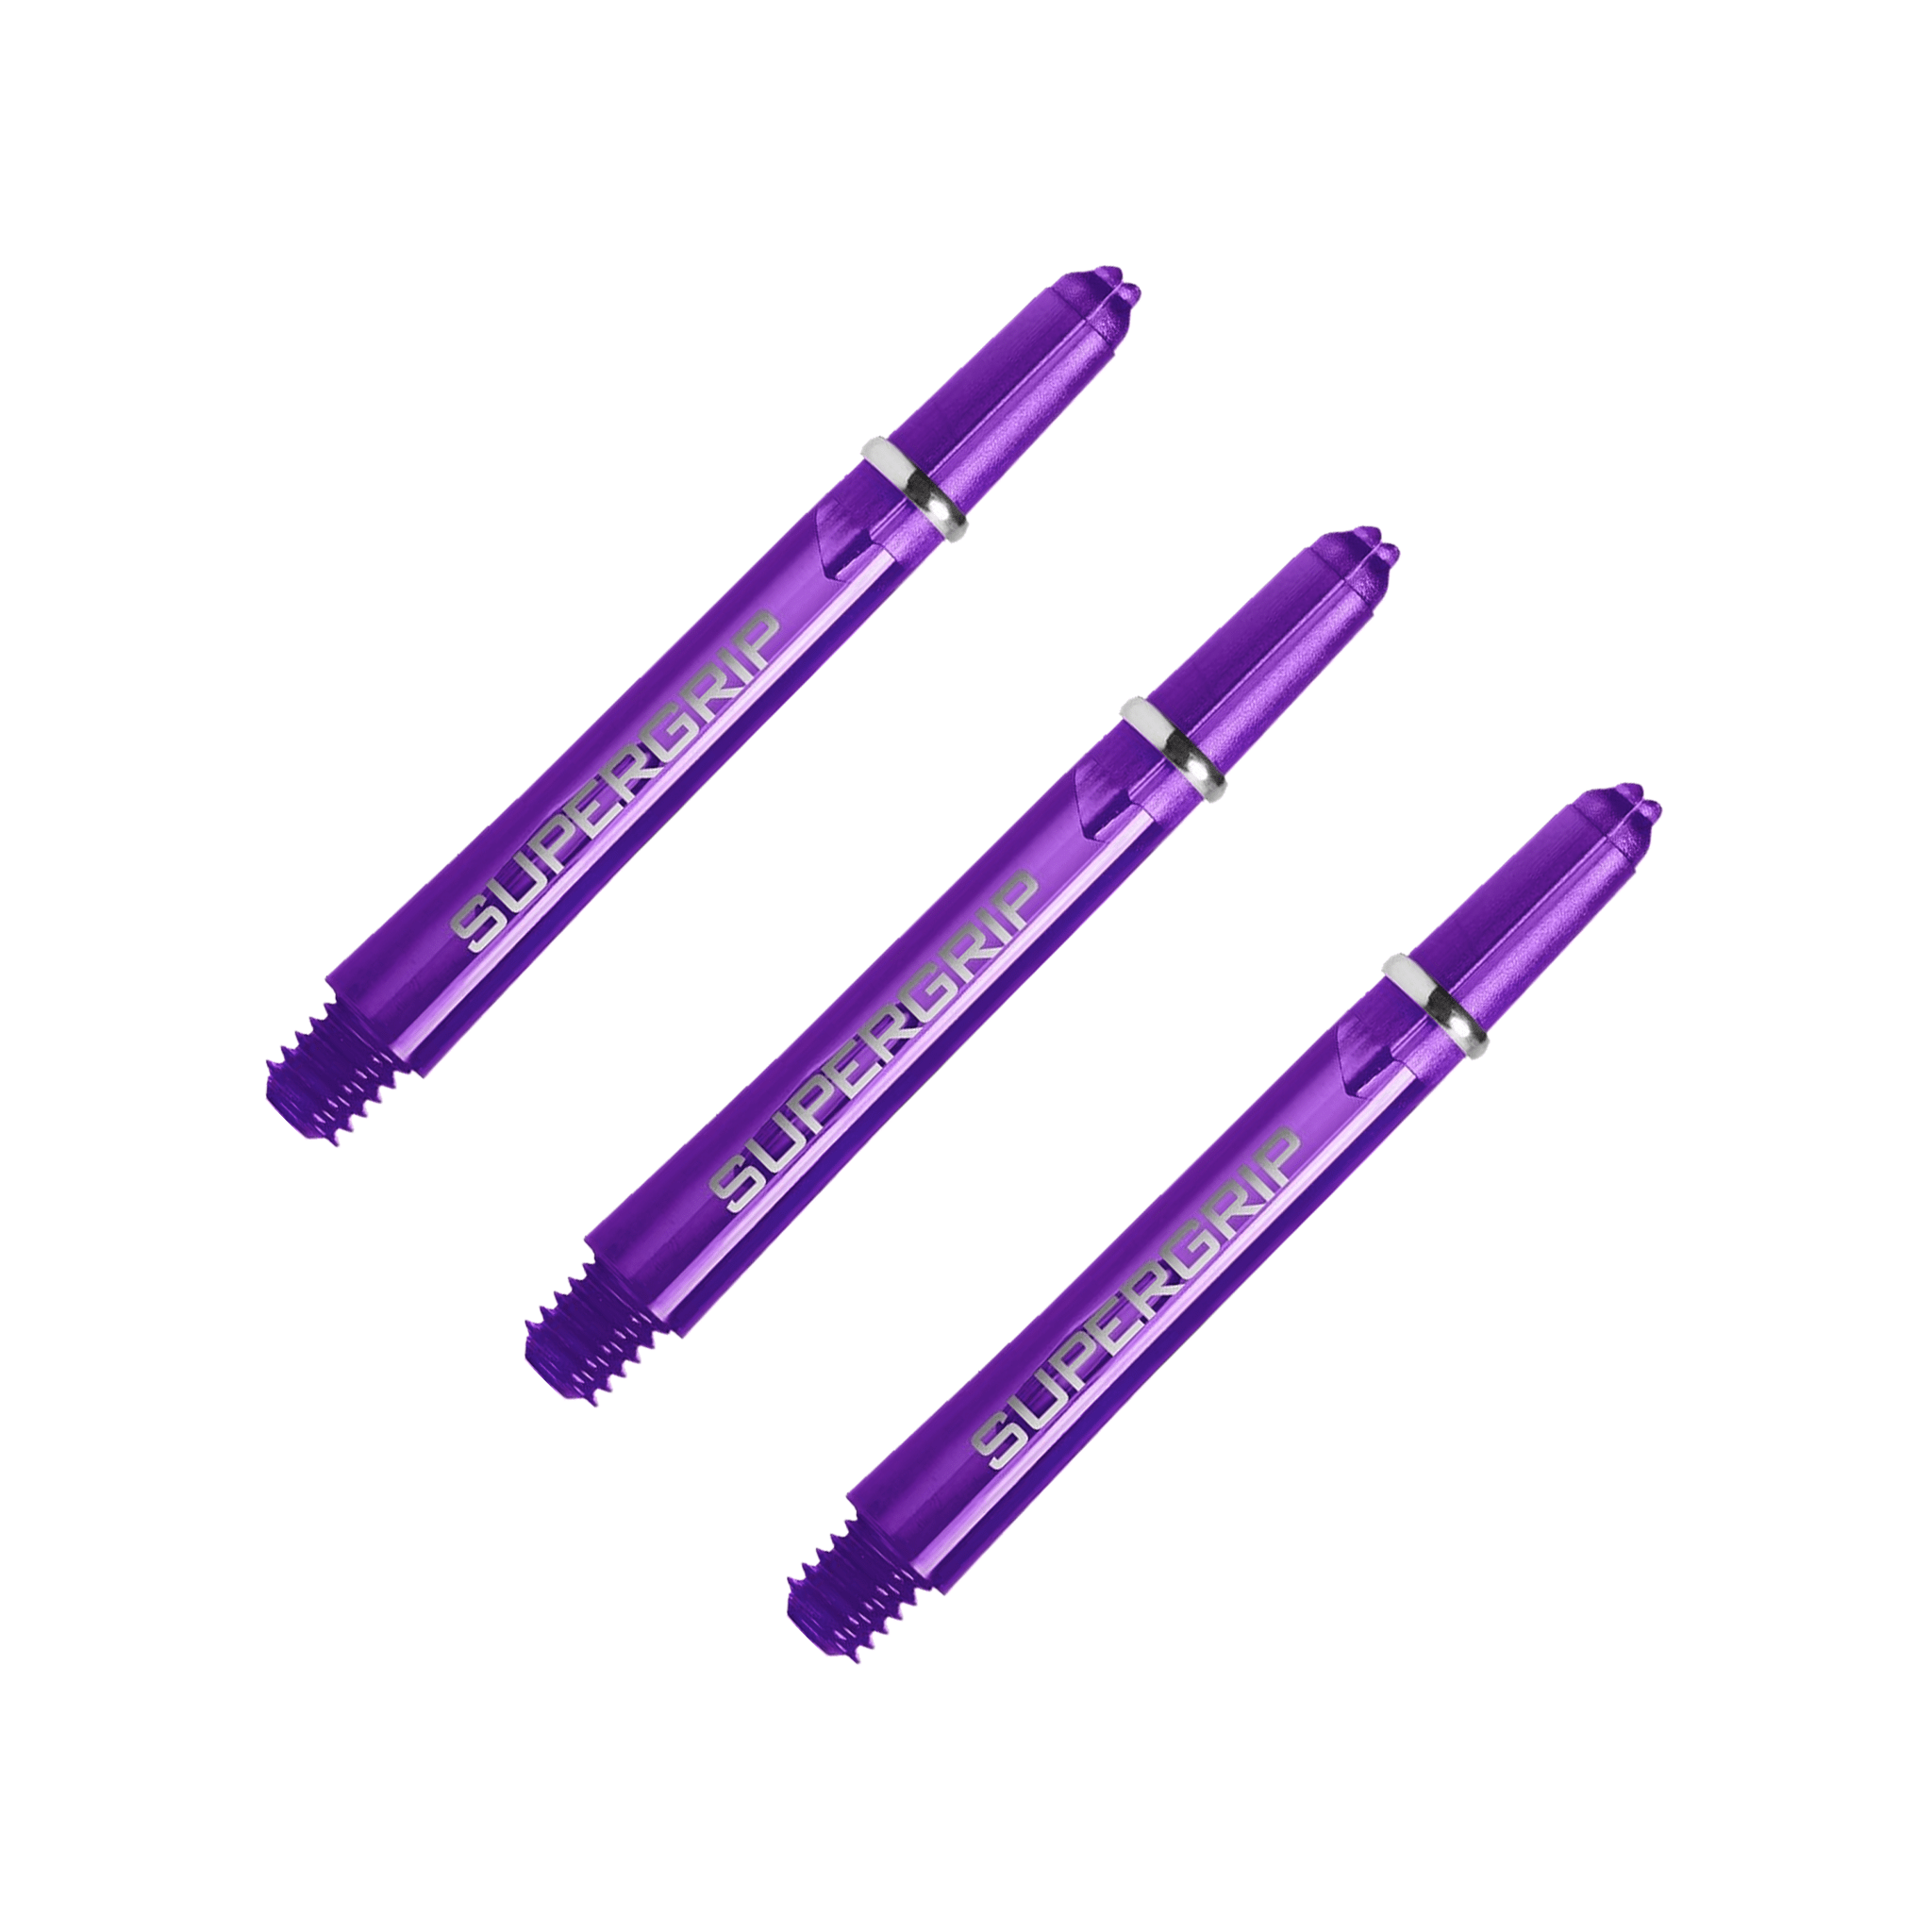 Harrows Supergrip - Nylon Dart Shafts Short (35mm) / Dark Purple Shafts